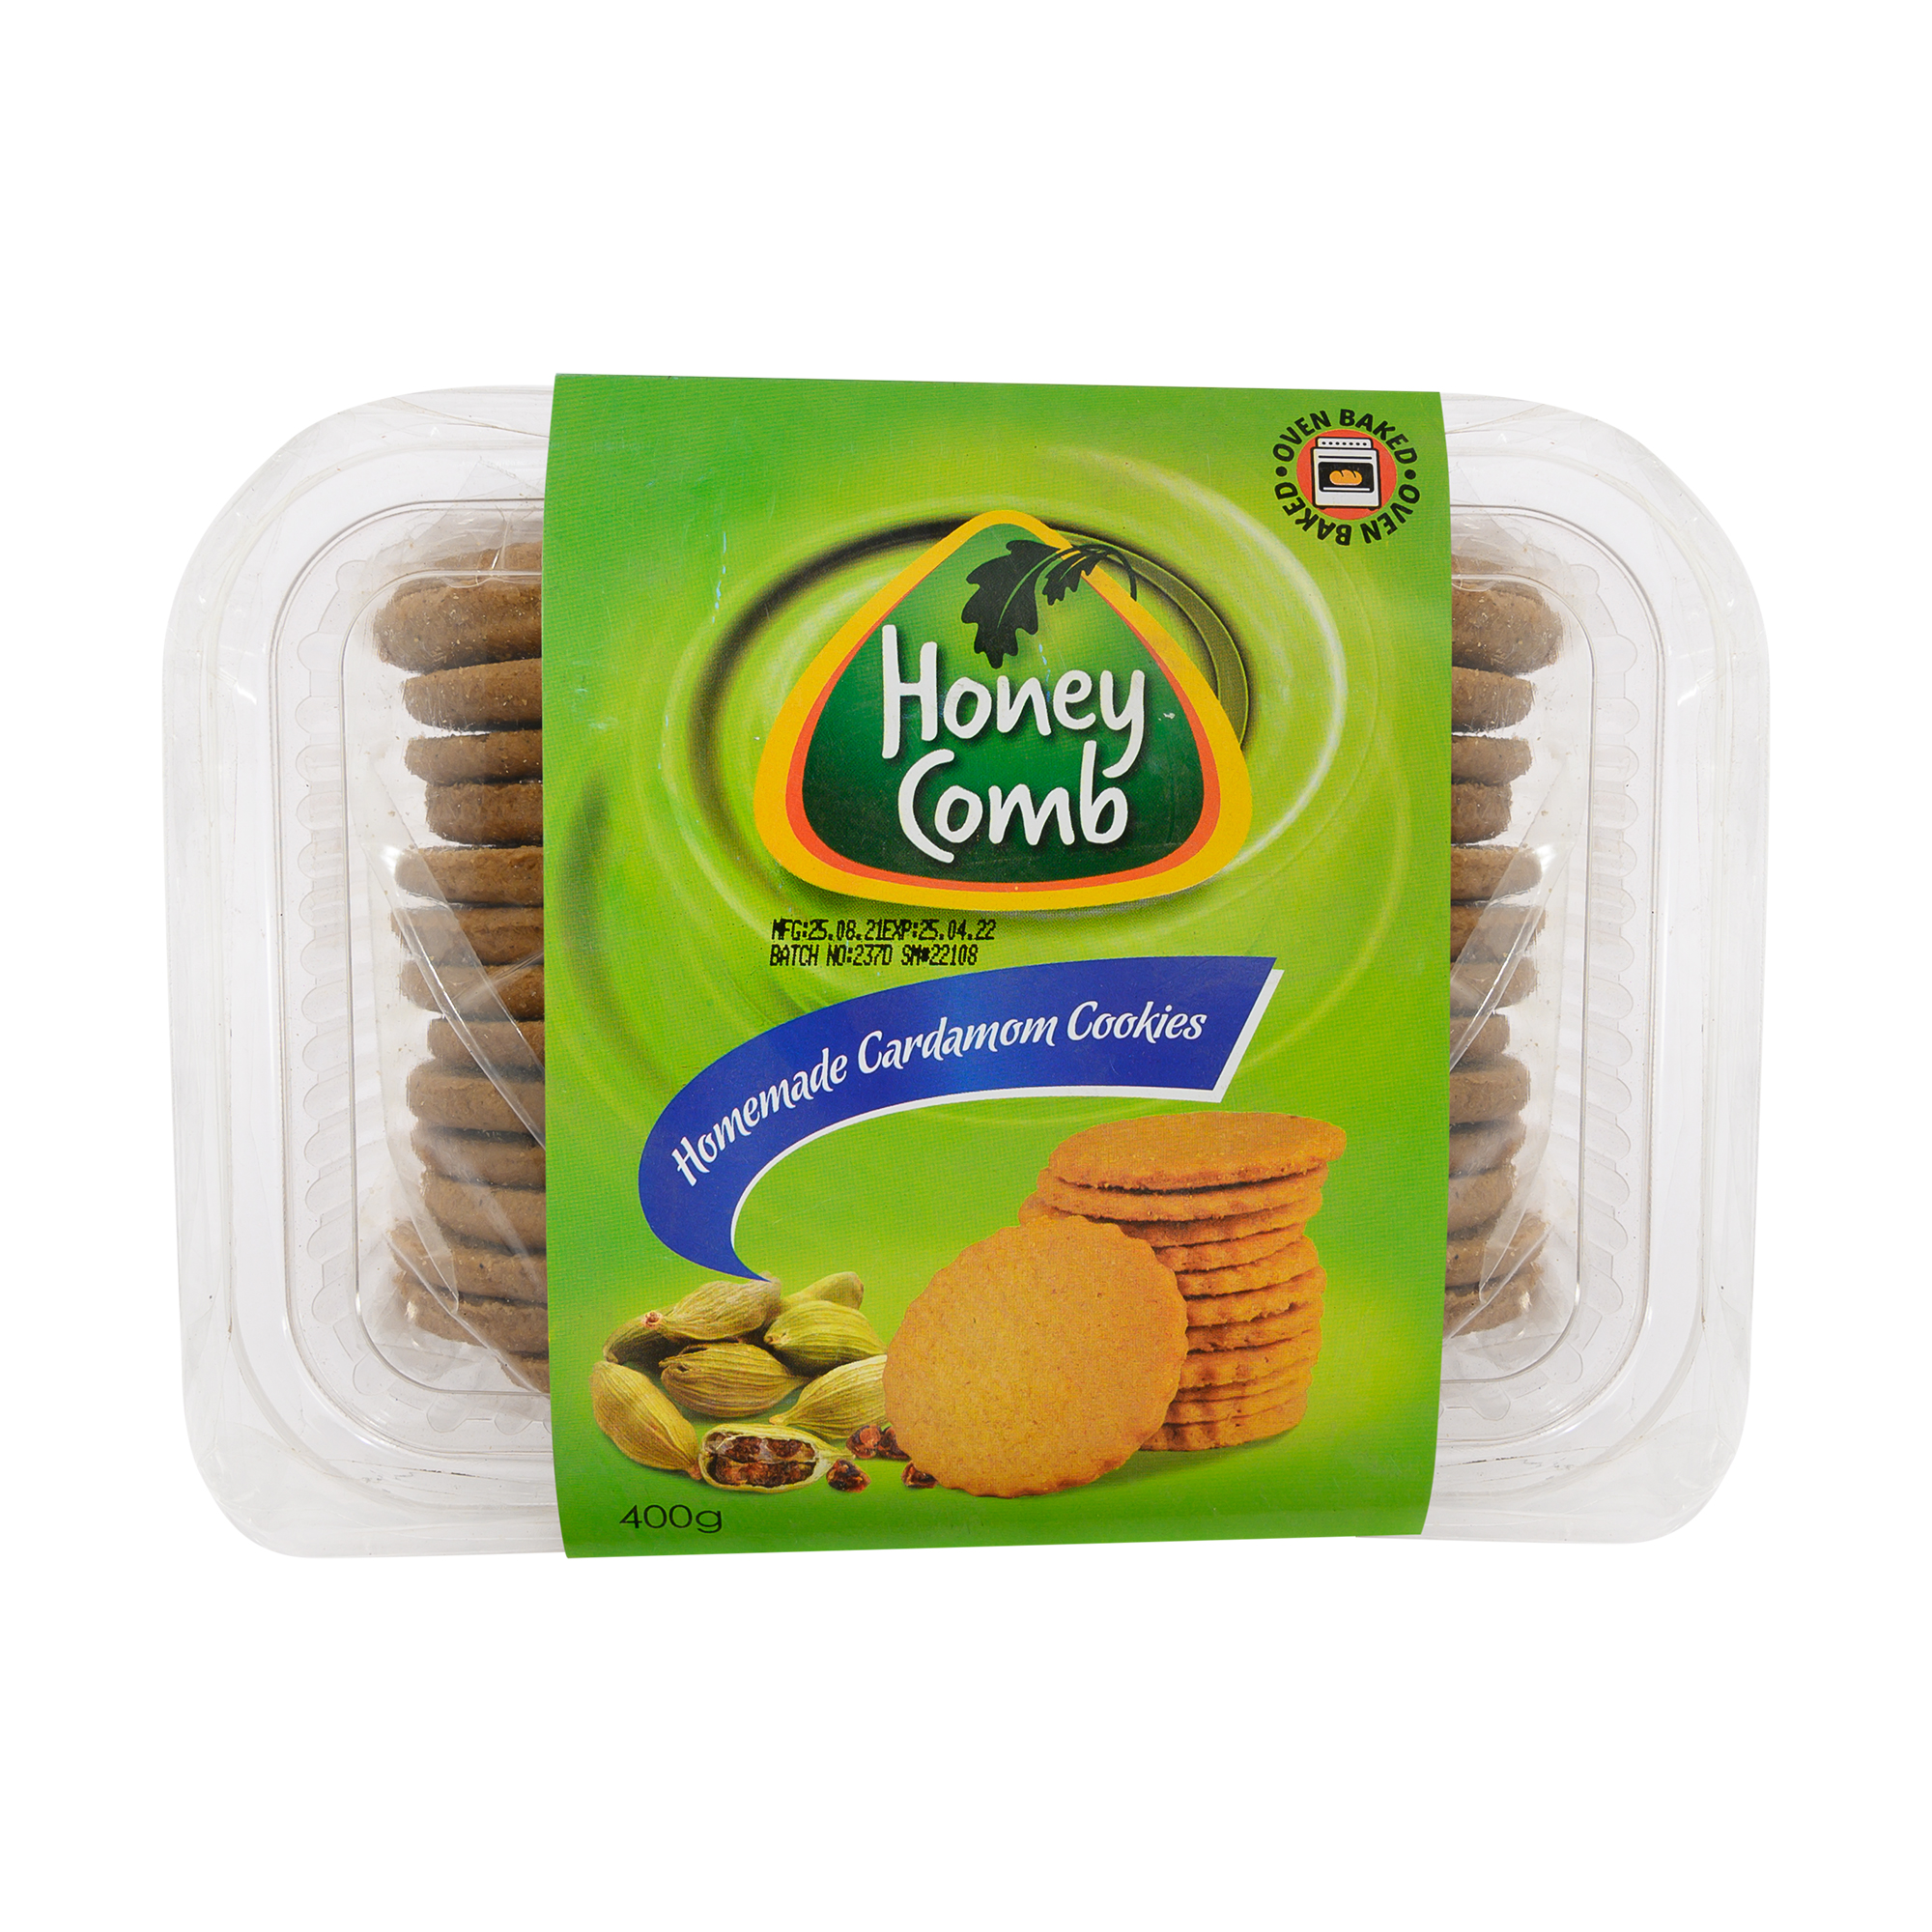 Honeycomb Cardamom Cookies 400g